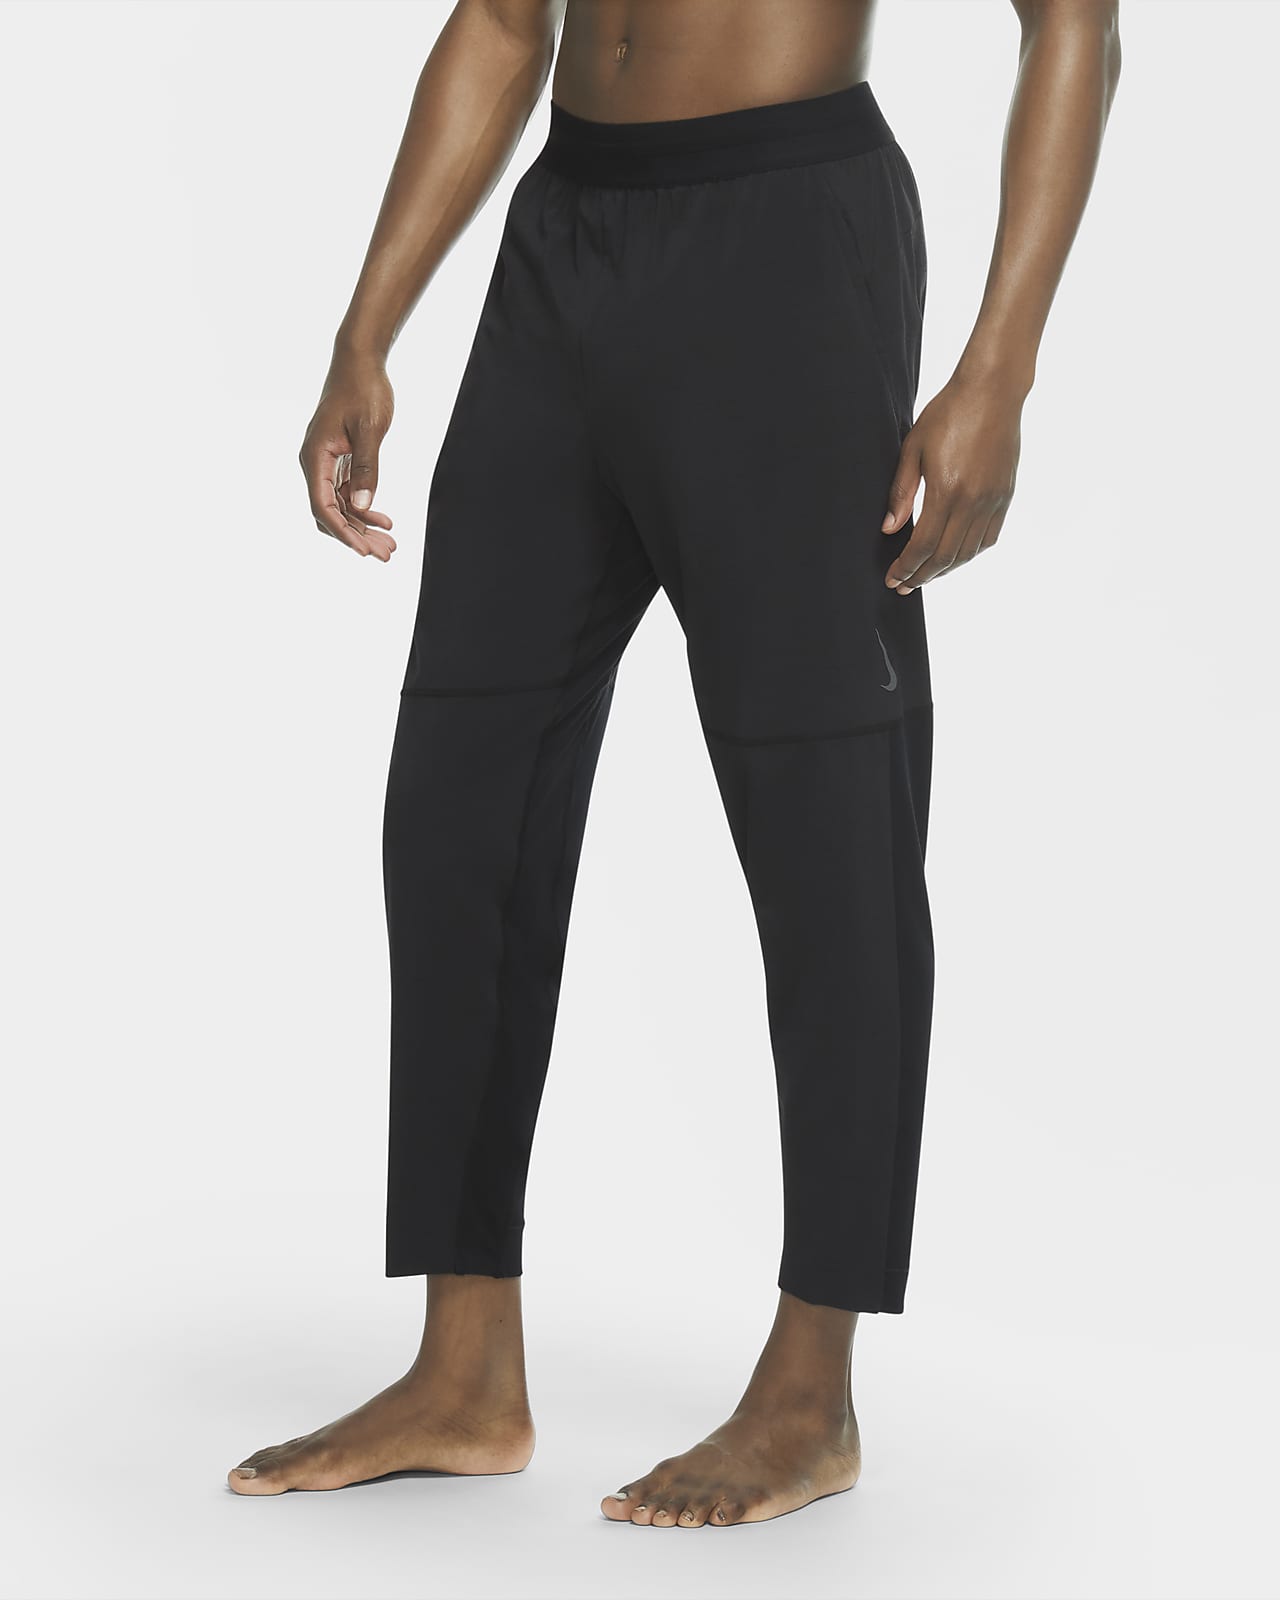 Pantalones para Nike Yoga.